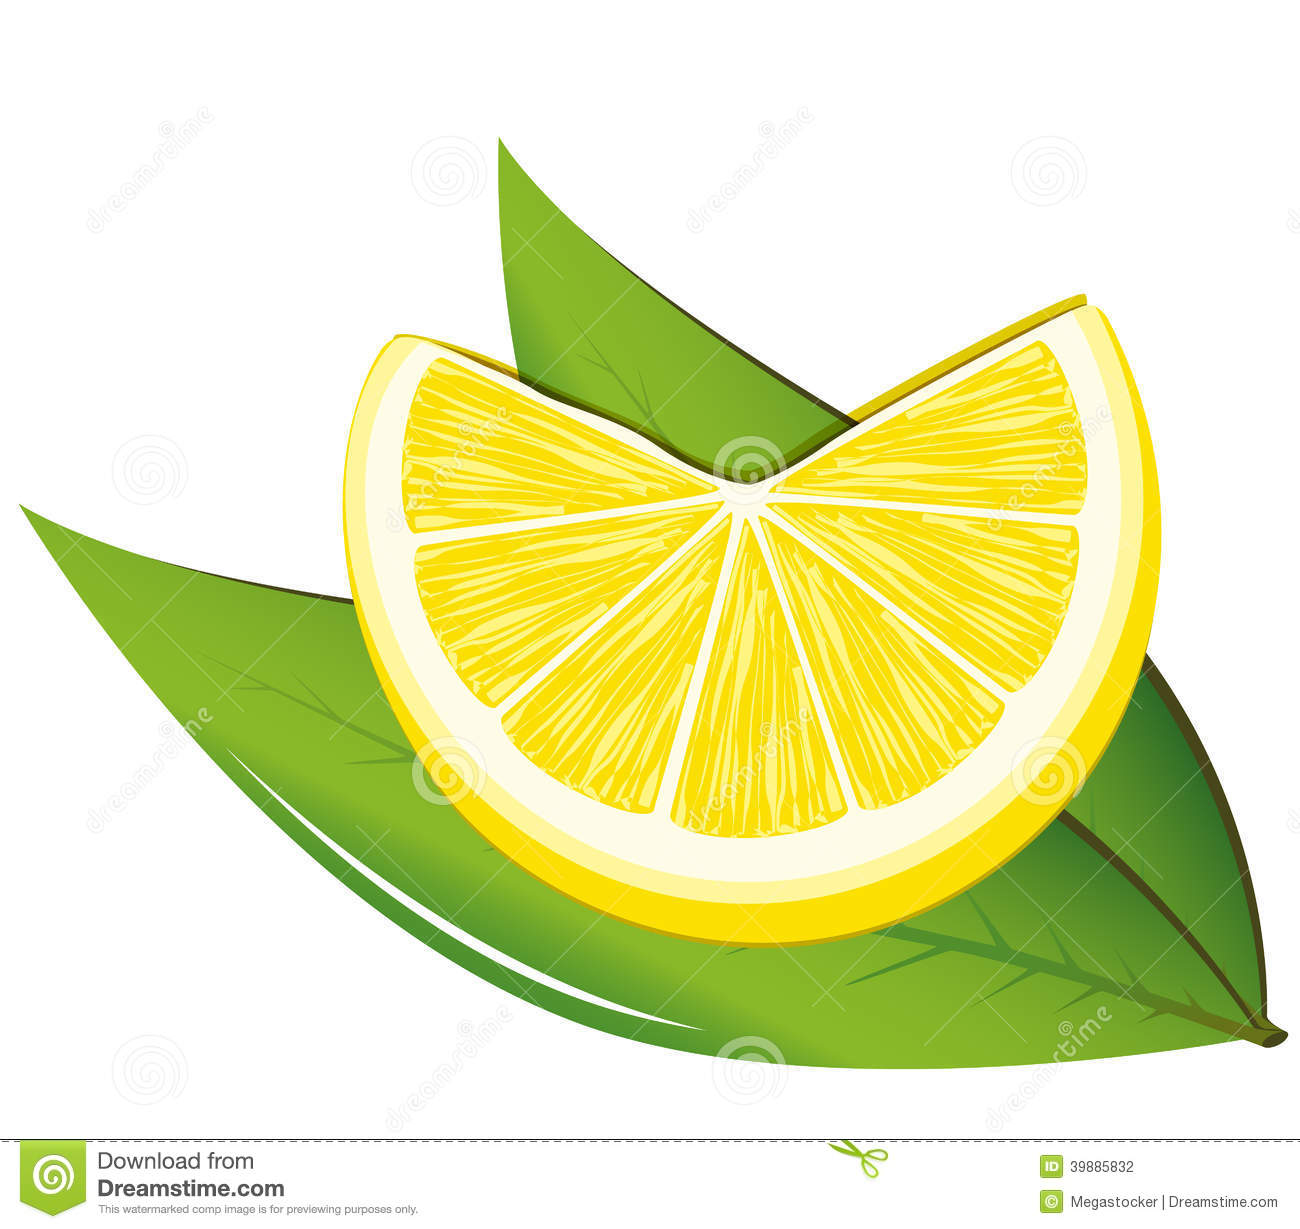 Lemon and Leaves Illustration